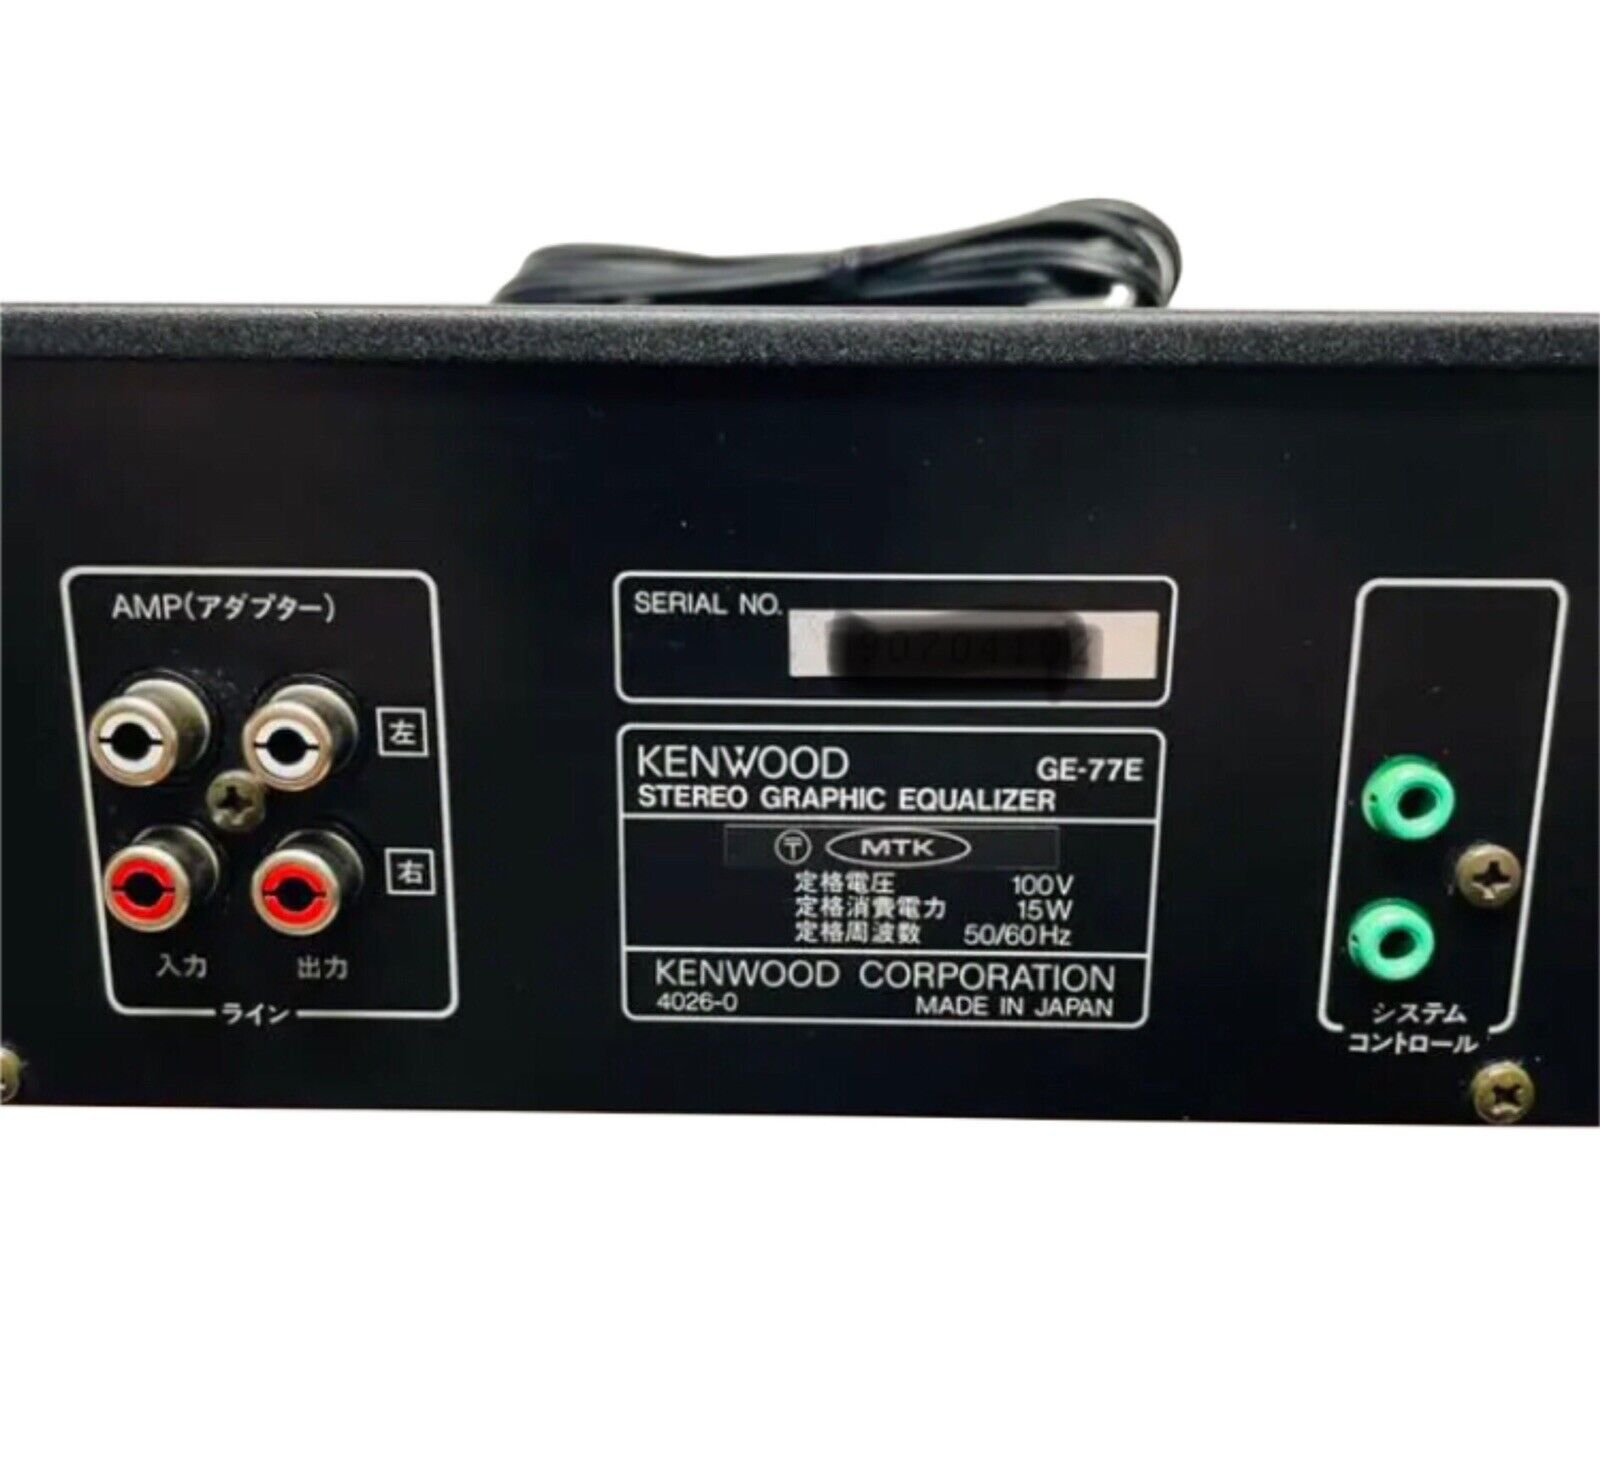 KENWOOD GE-77E 14-band graphic equalizer 2ch spectrum analyzer black used